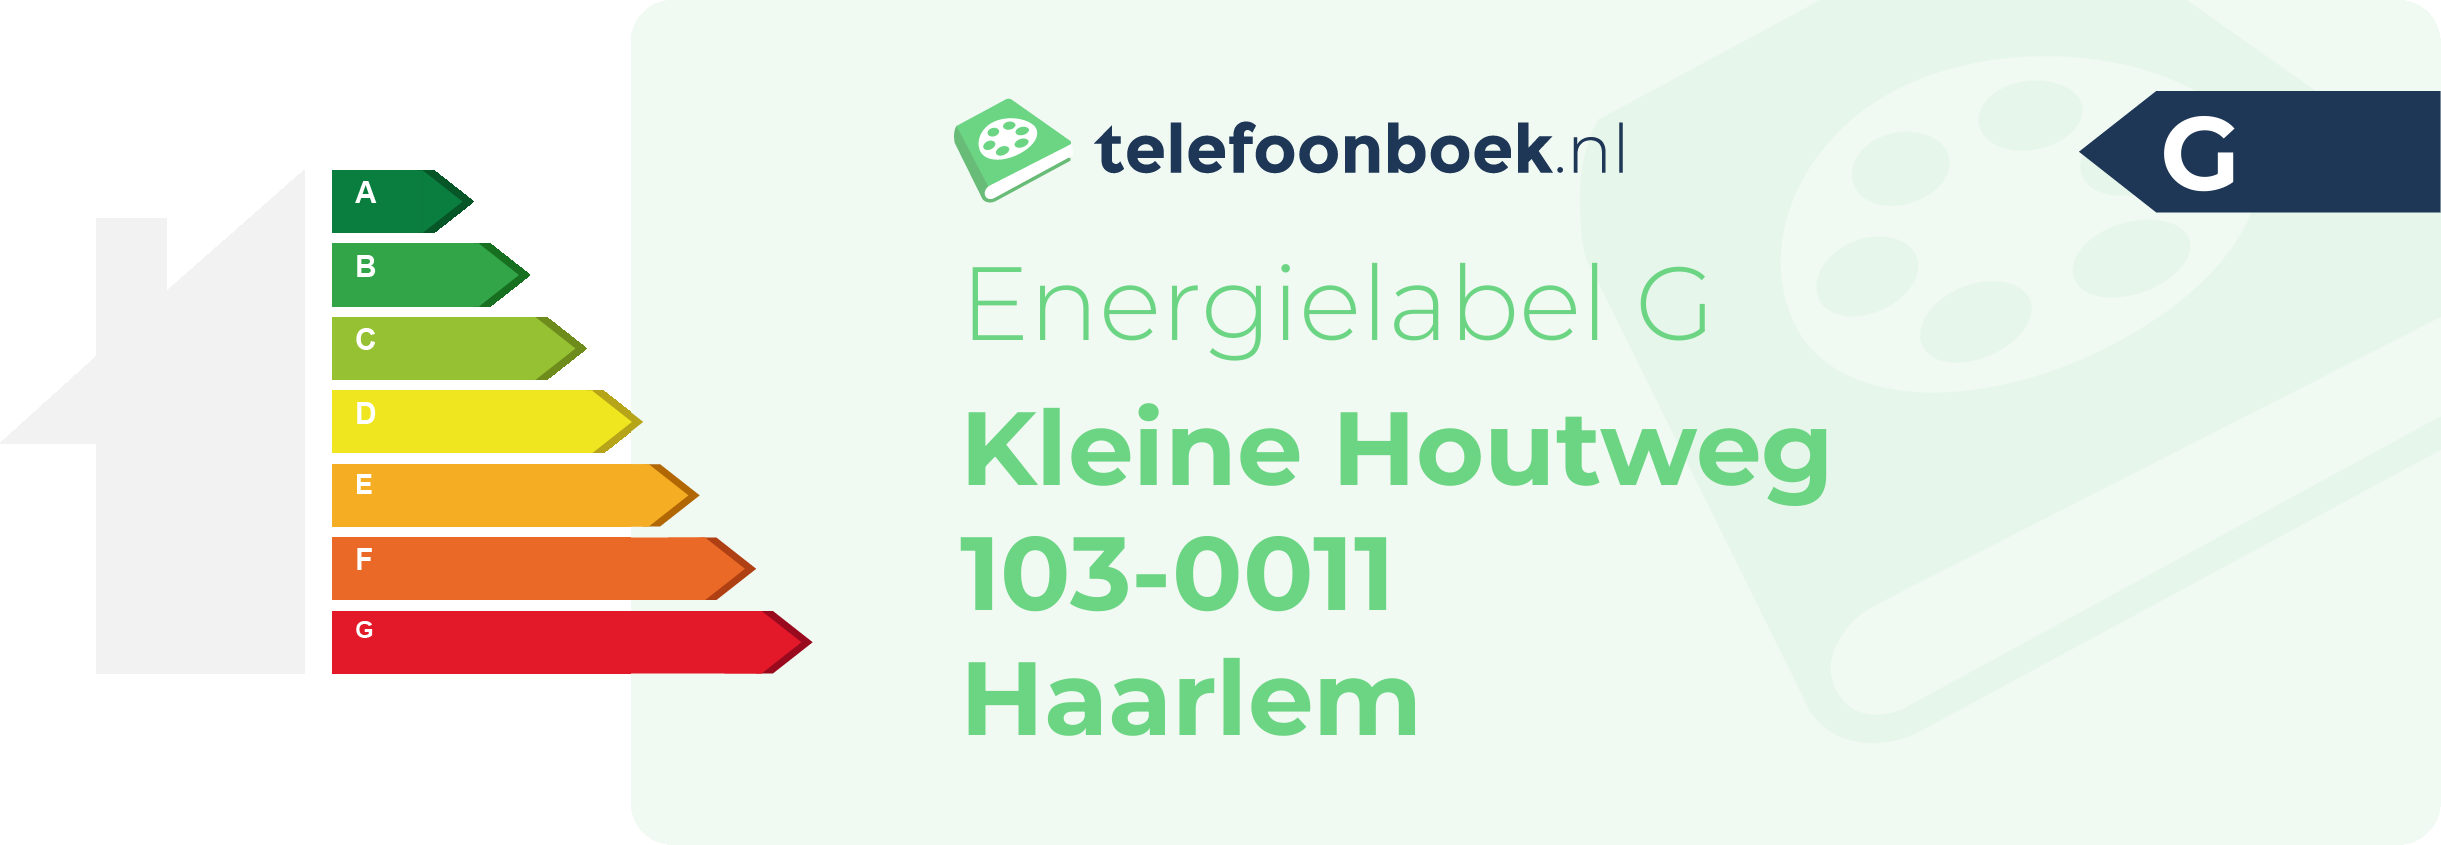 Energielabel Kleine Houtweg 103-0011 Haarlem